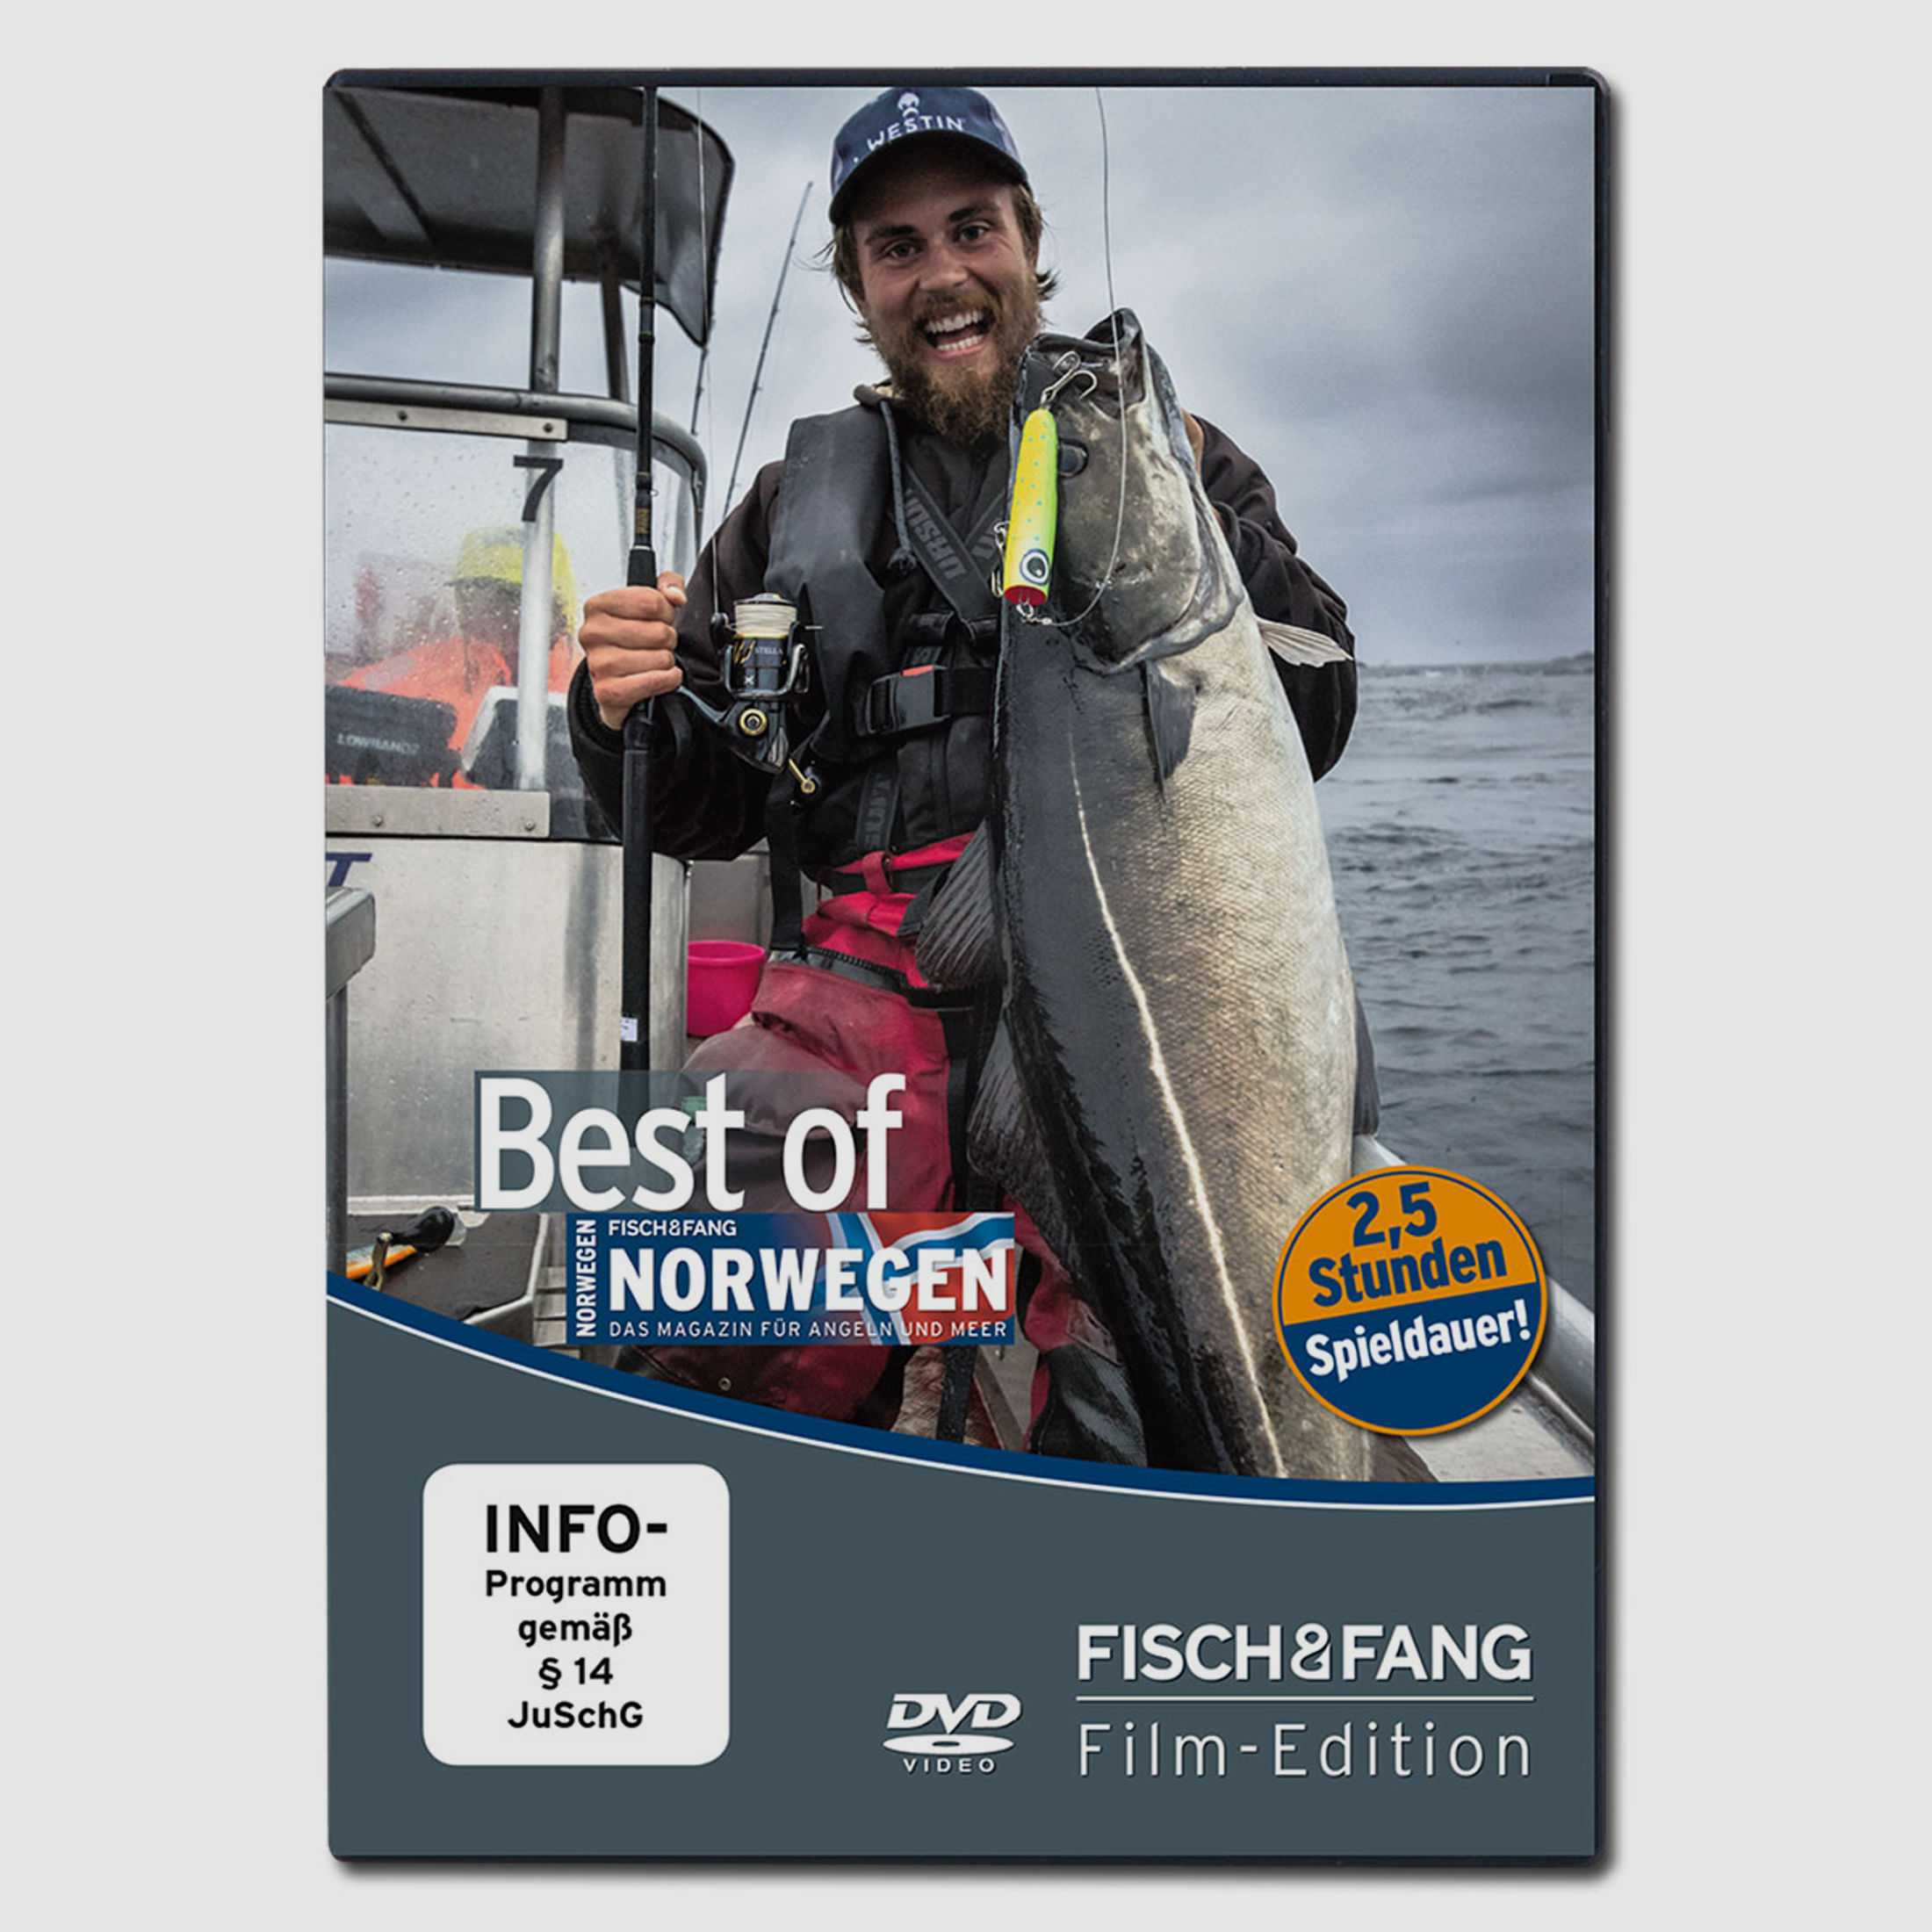 Best of Norwegen - FISCH & FANG Film-Edition (DVD)